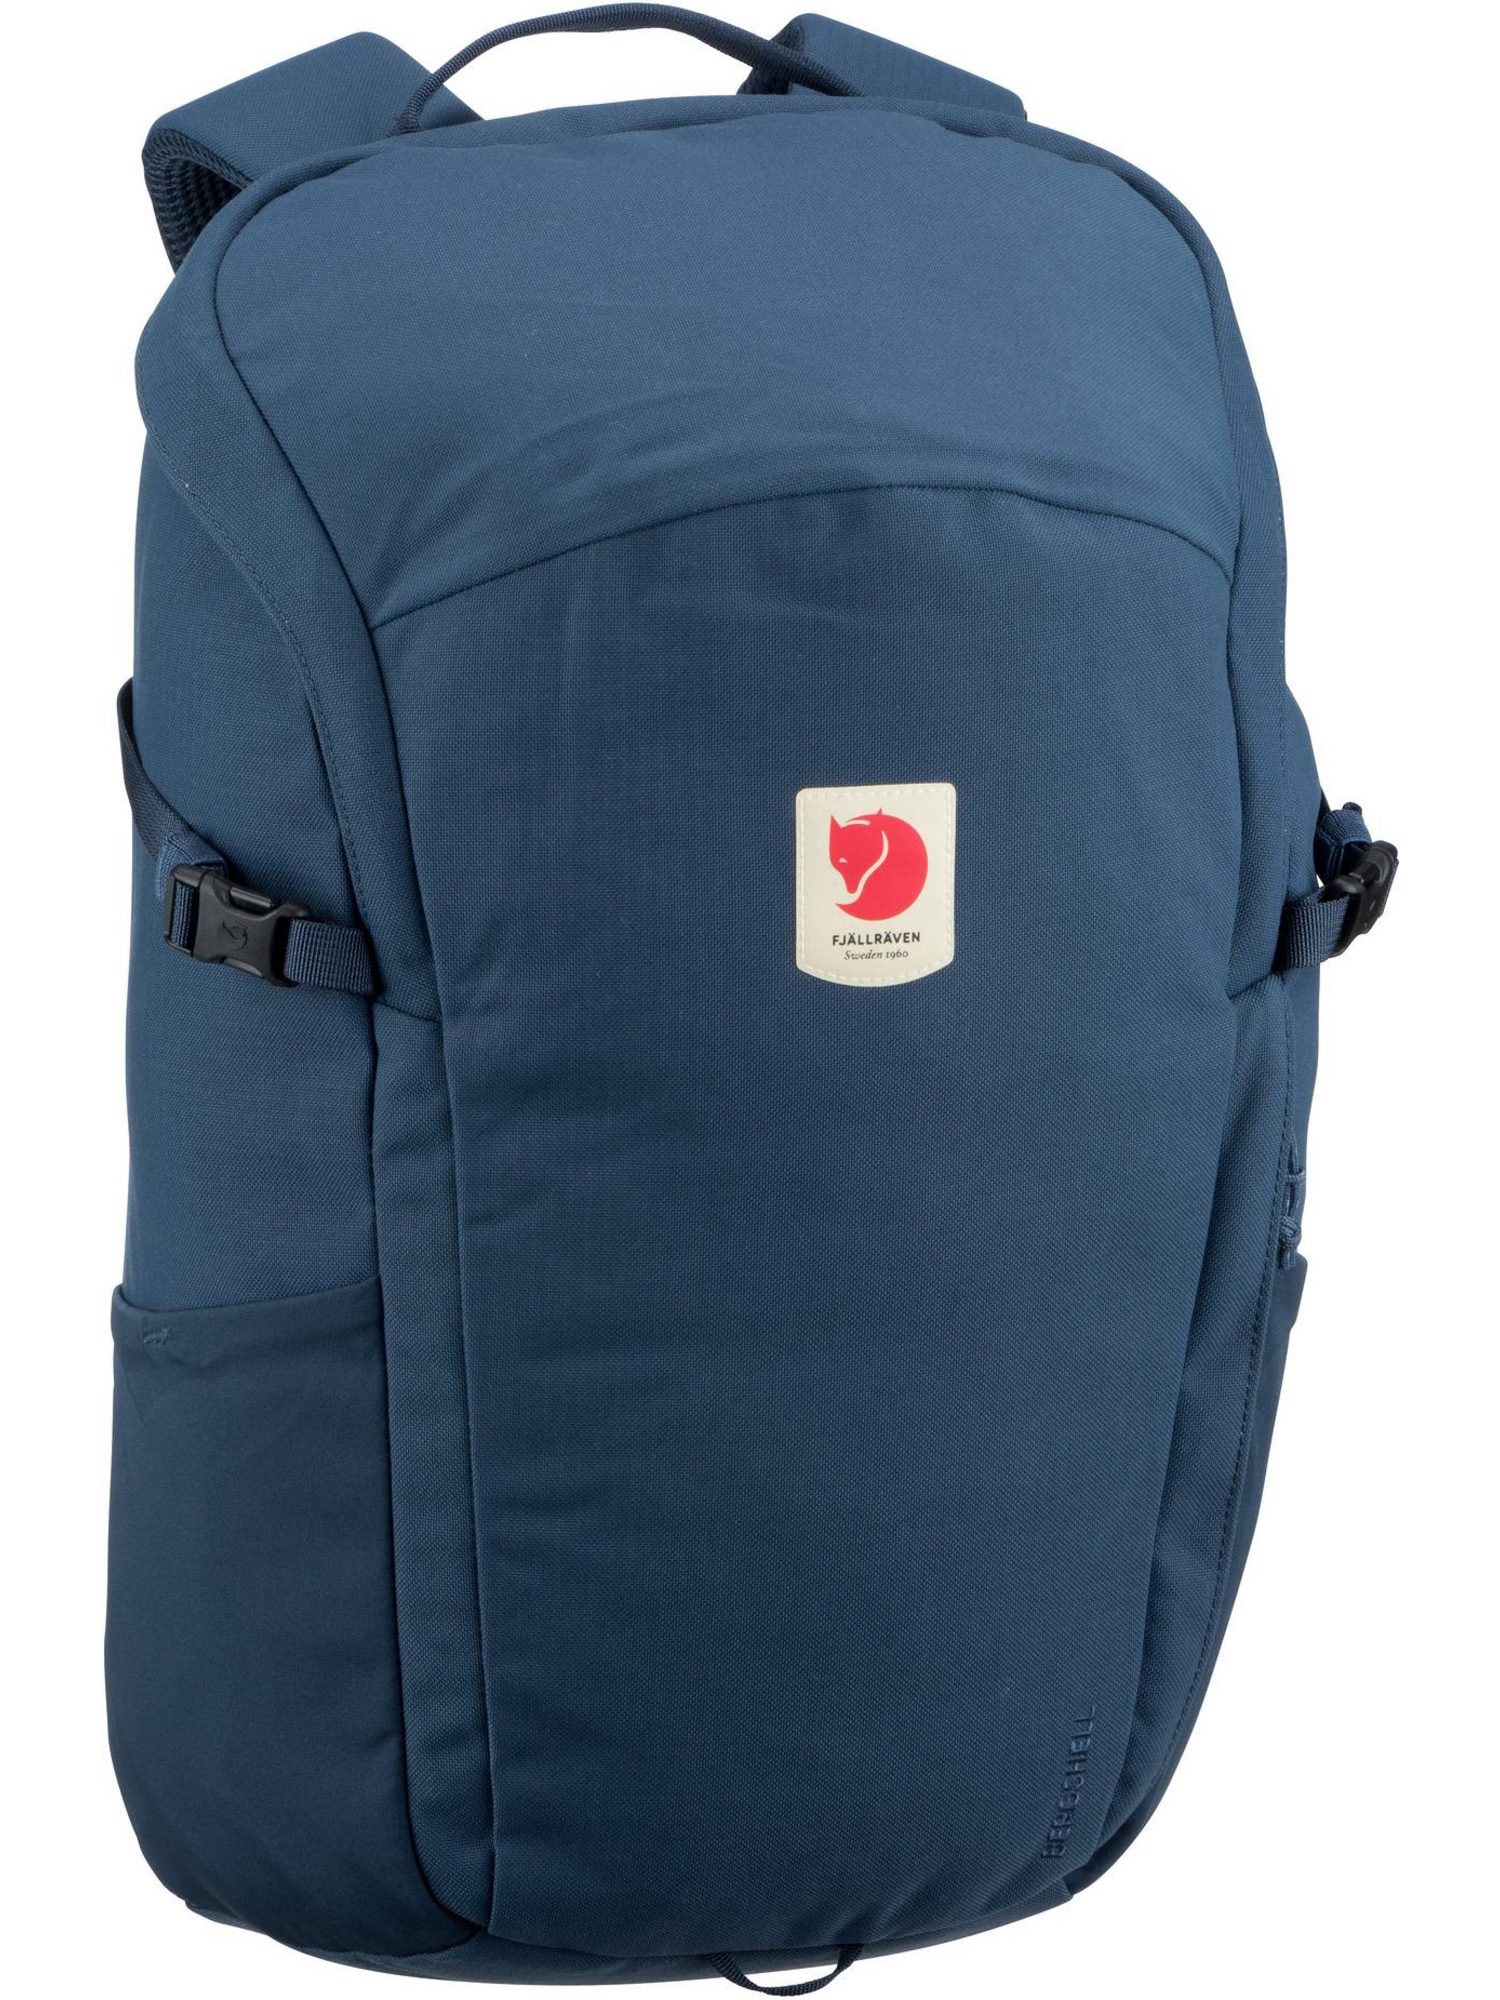 Рюкзак FJÄLLRÄVEN/Backpack Ulvö 23, цвет Mountain Blue сумка рюкзак ulvö среднего размера fjällräven цвет red gold